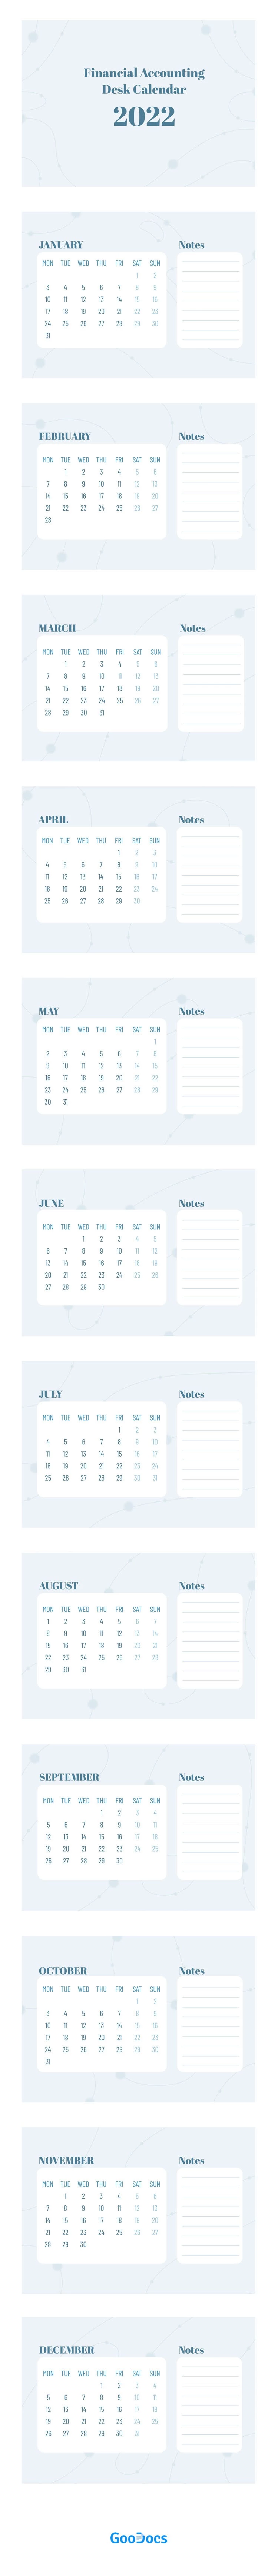 Financial Accounting Desk Calendar - free Google Docs Template - 10061940